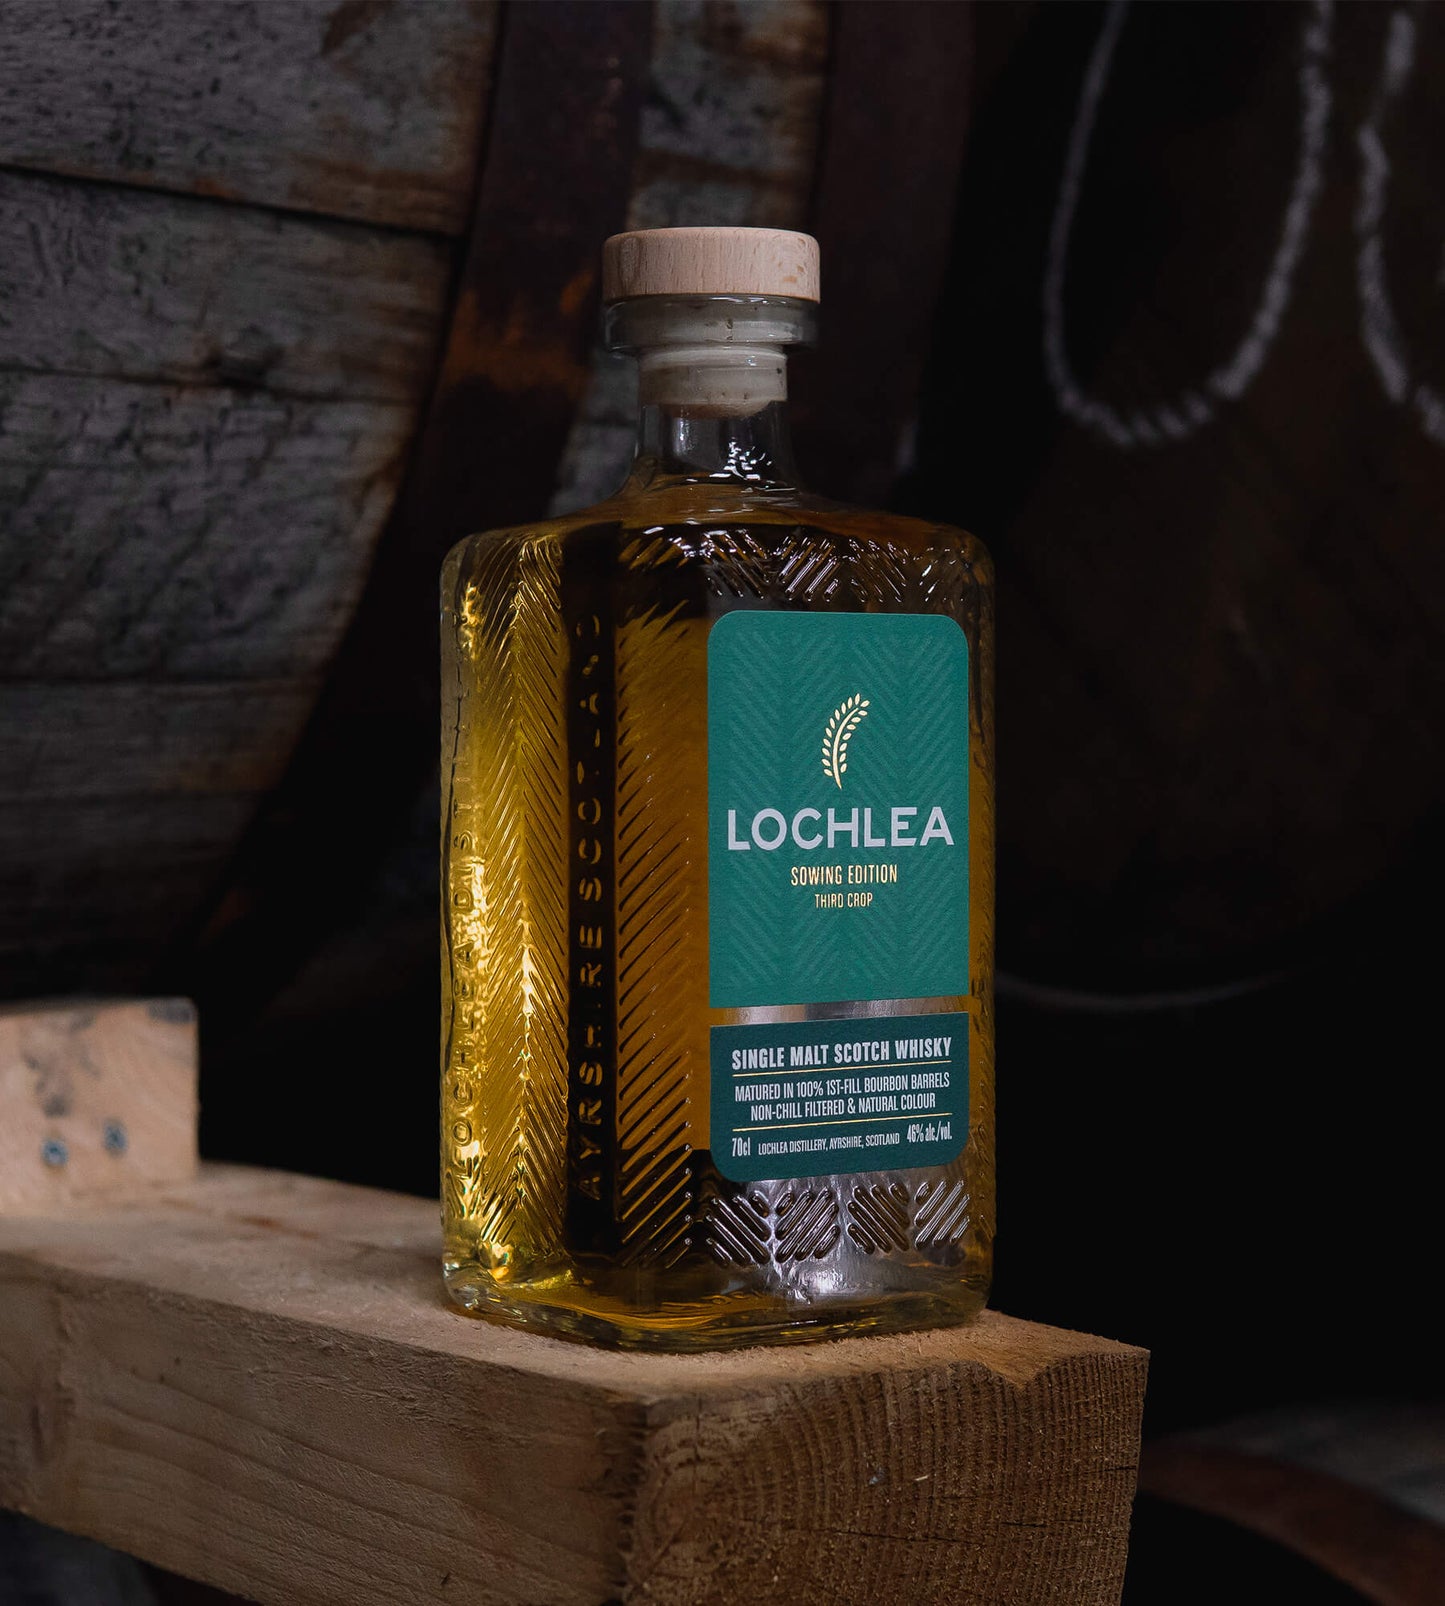 Lochlea Single Malt Scotch Whisky • Sowing Edition 3rd Crop